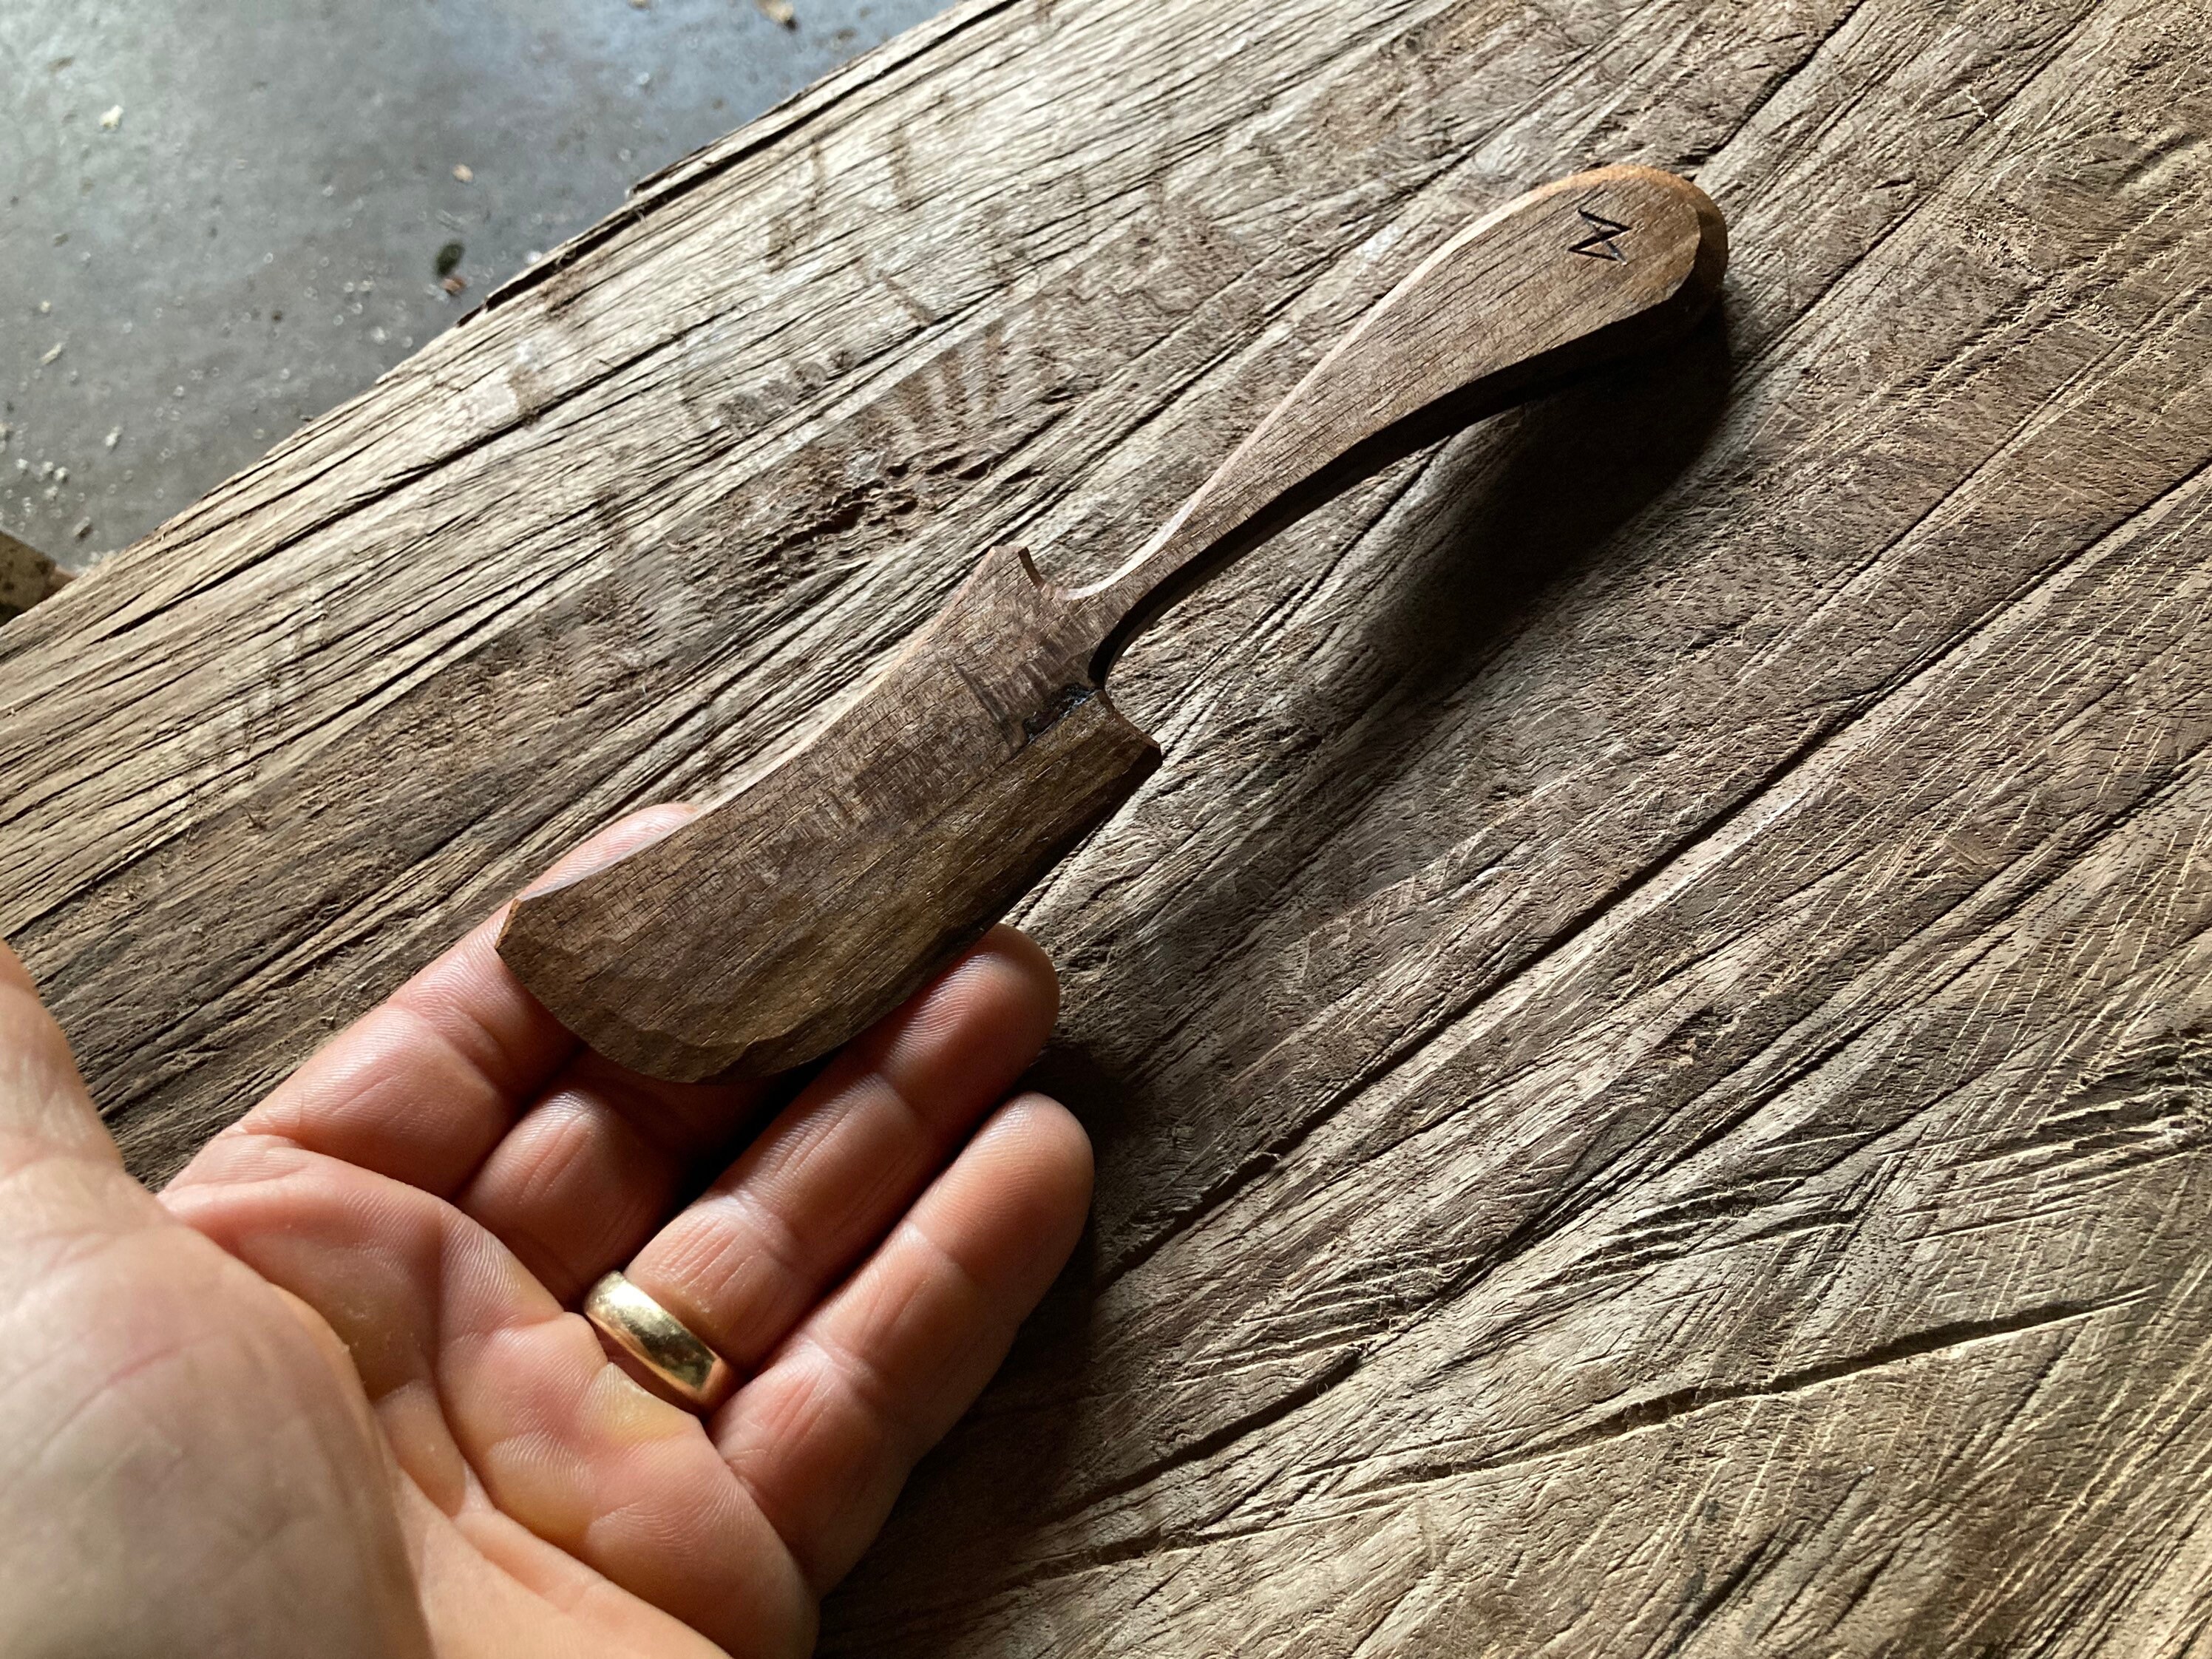 Sandwich Hand Made Knife 7 Inch, Vintage Wooden Handle Butter Spreader